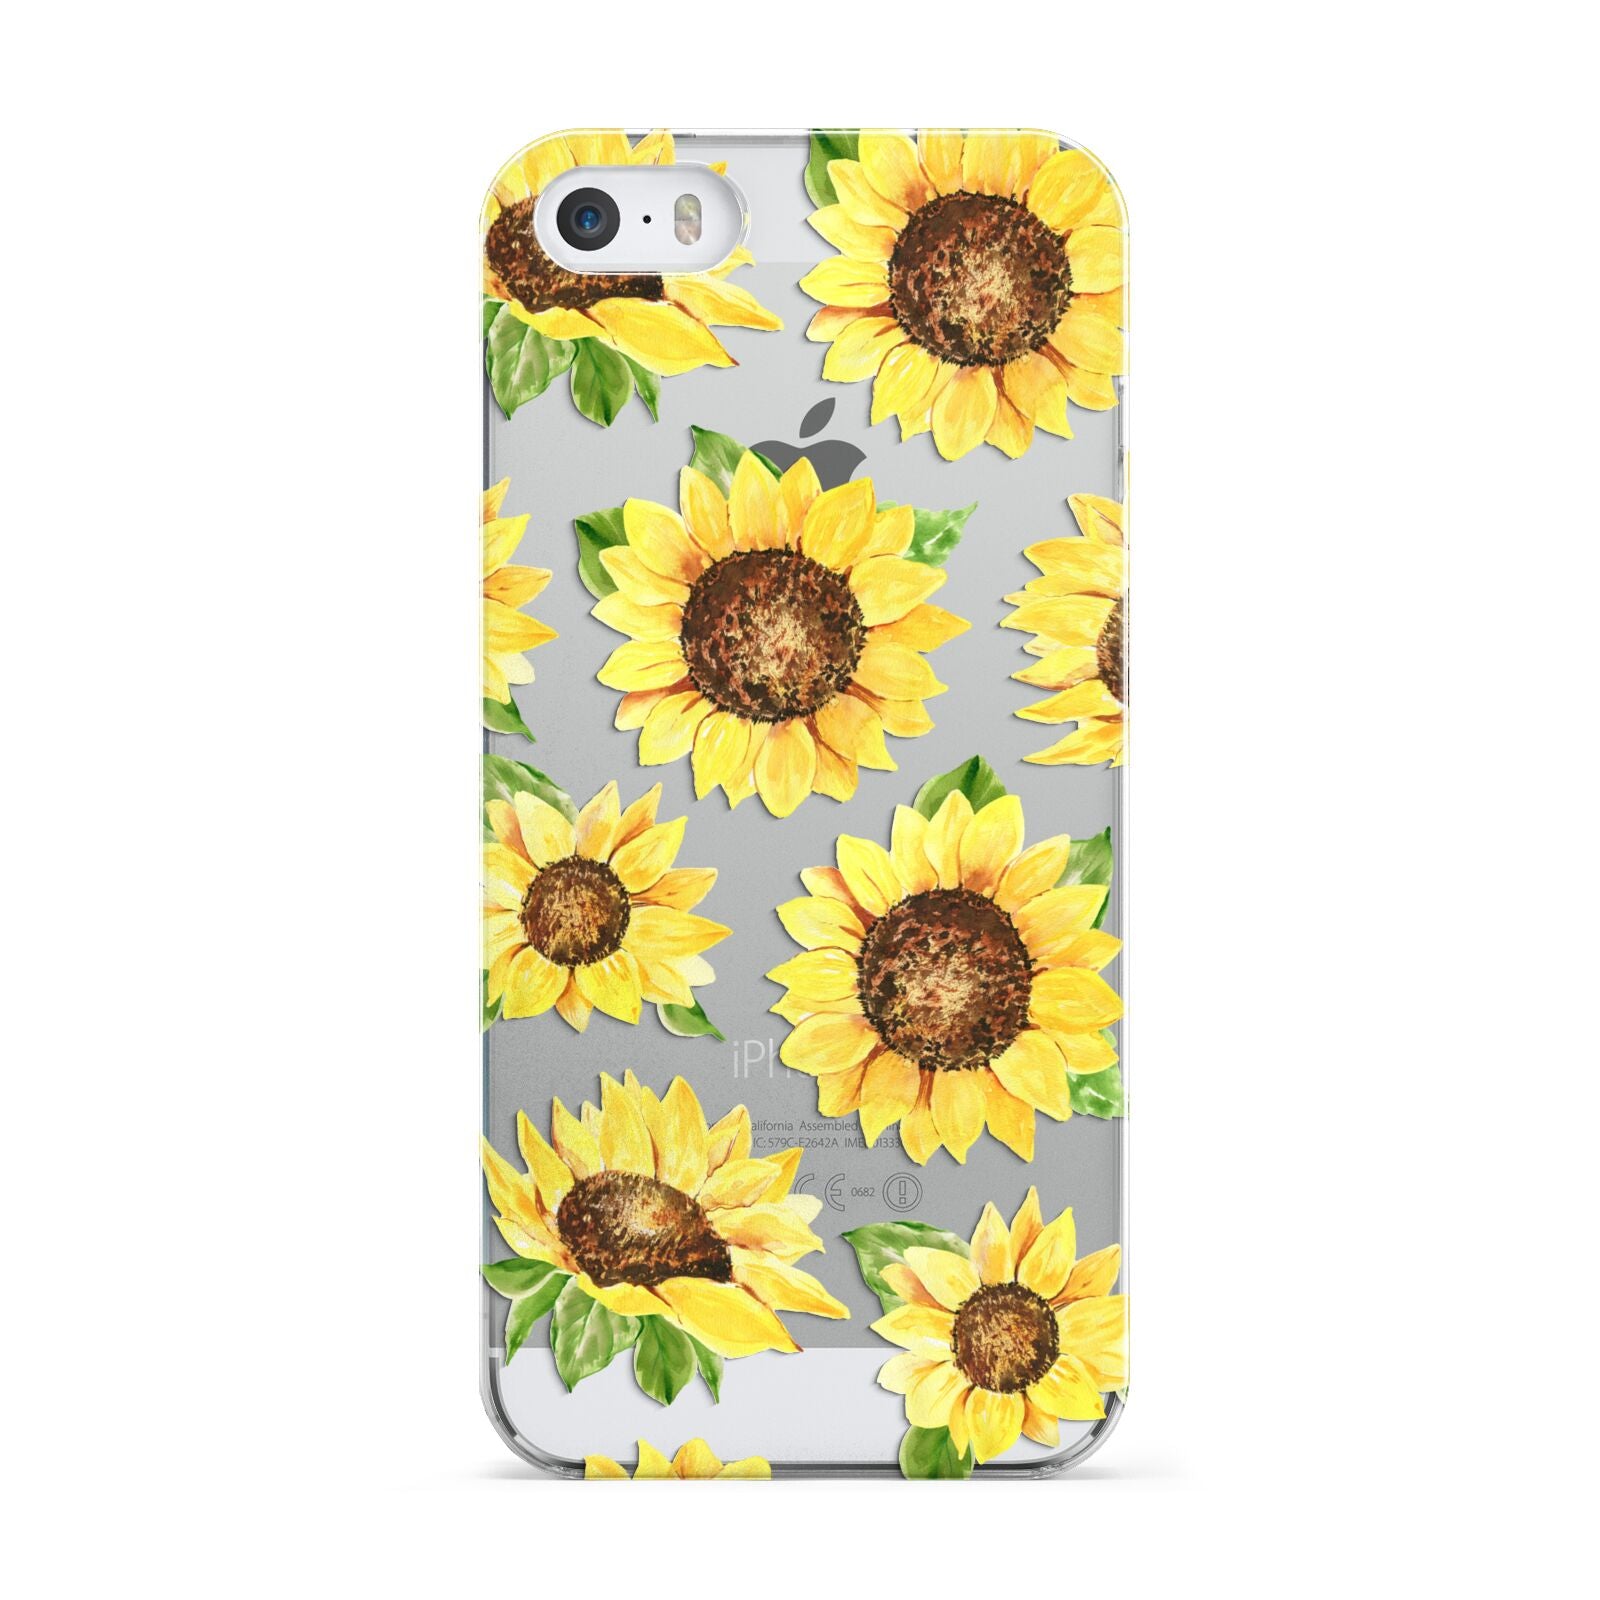 Sunflowers Apple iPhone 5 Case